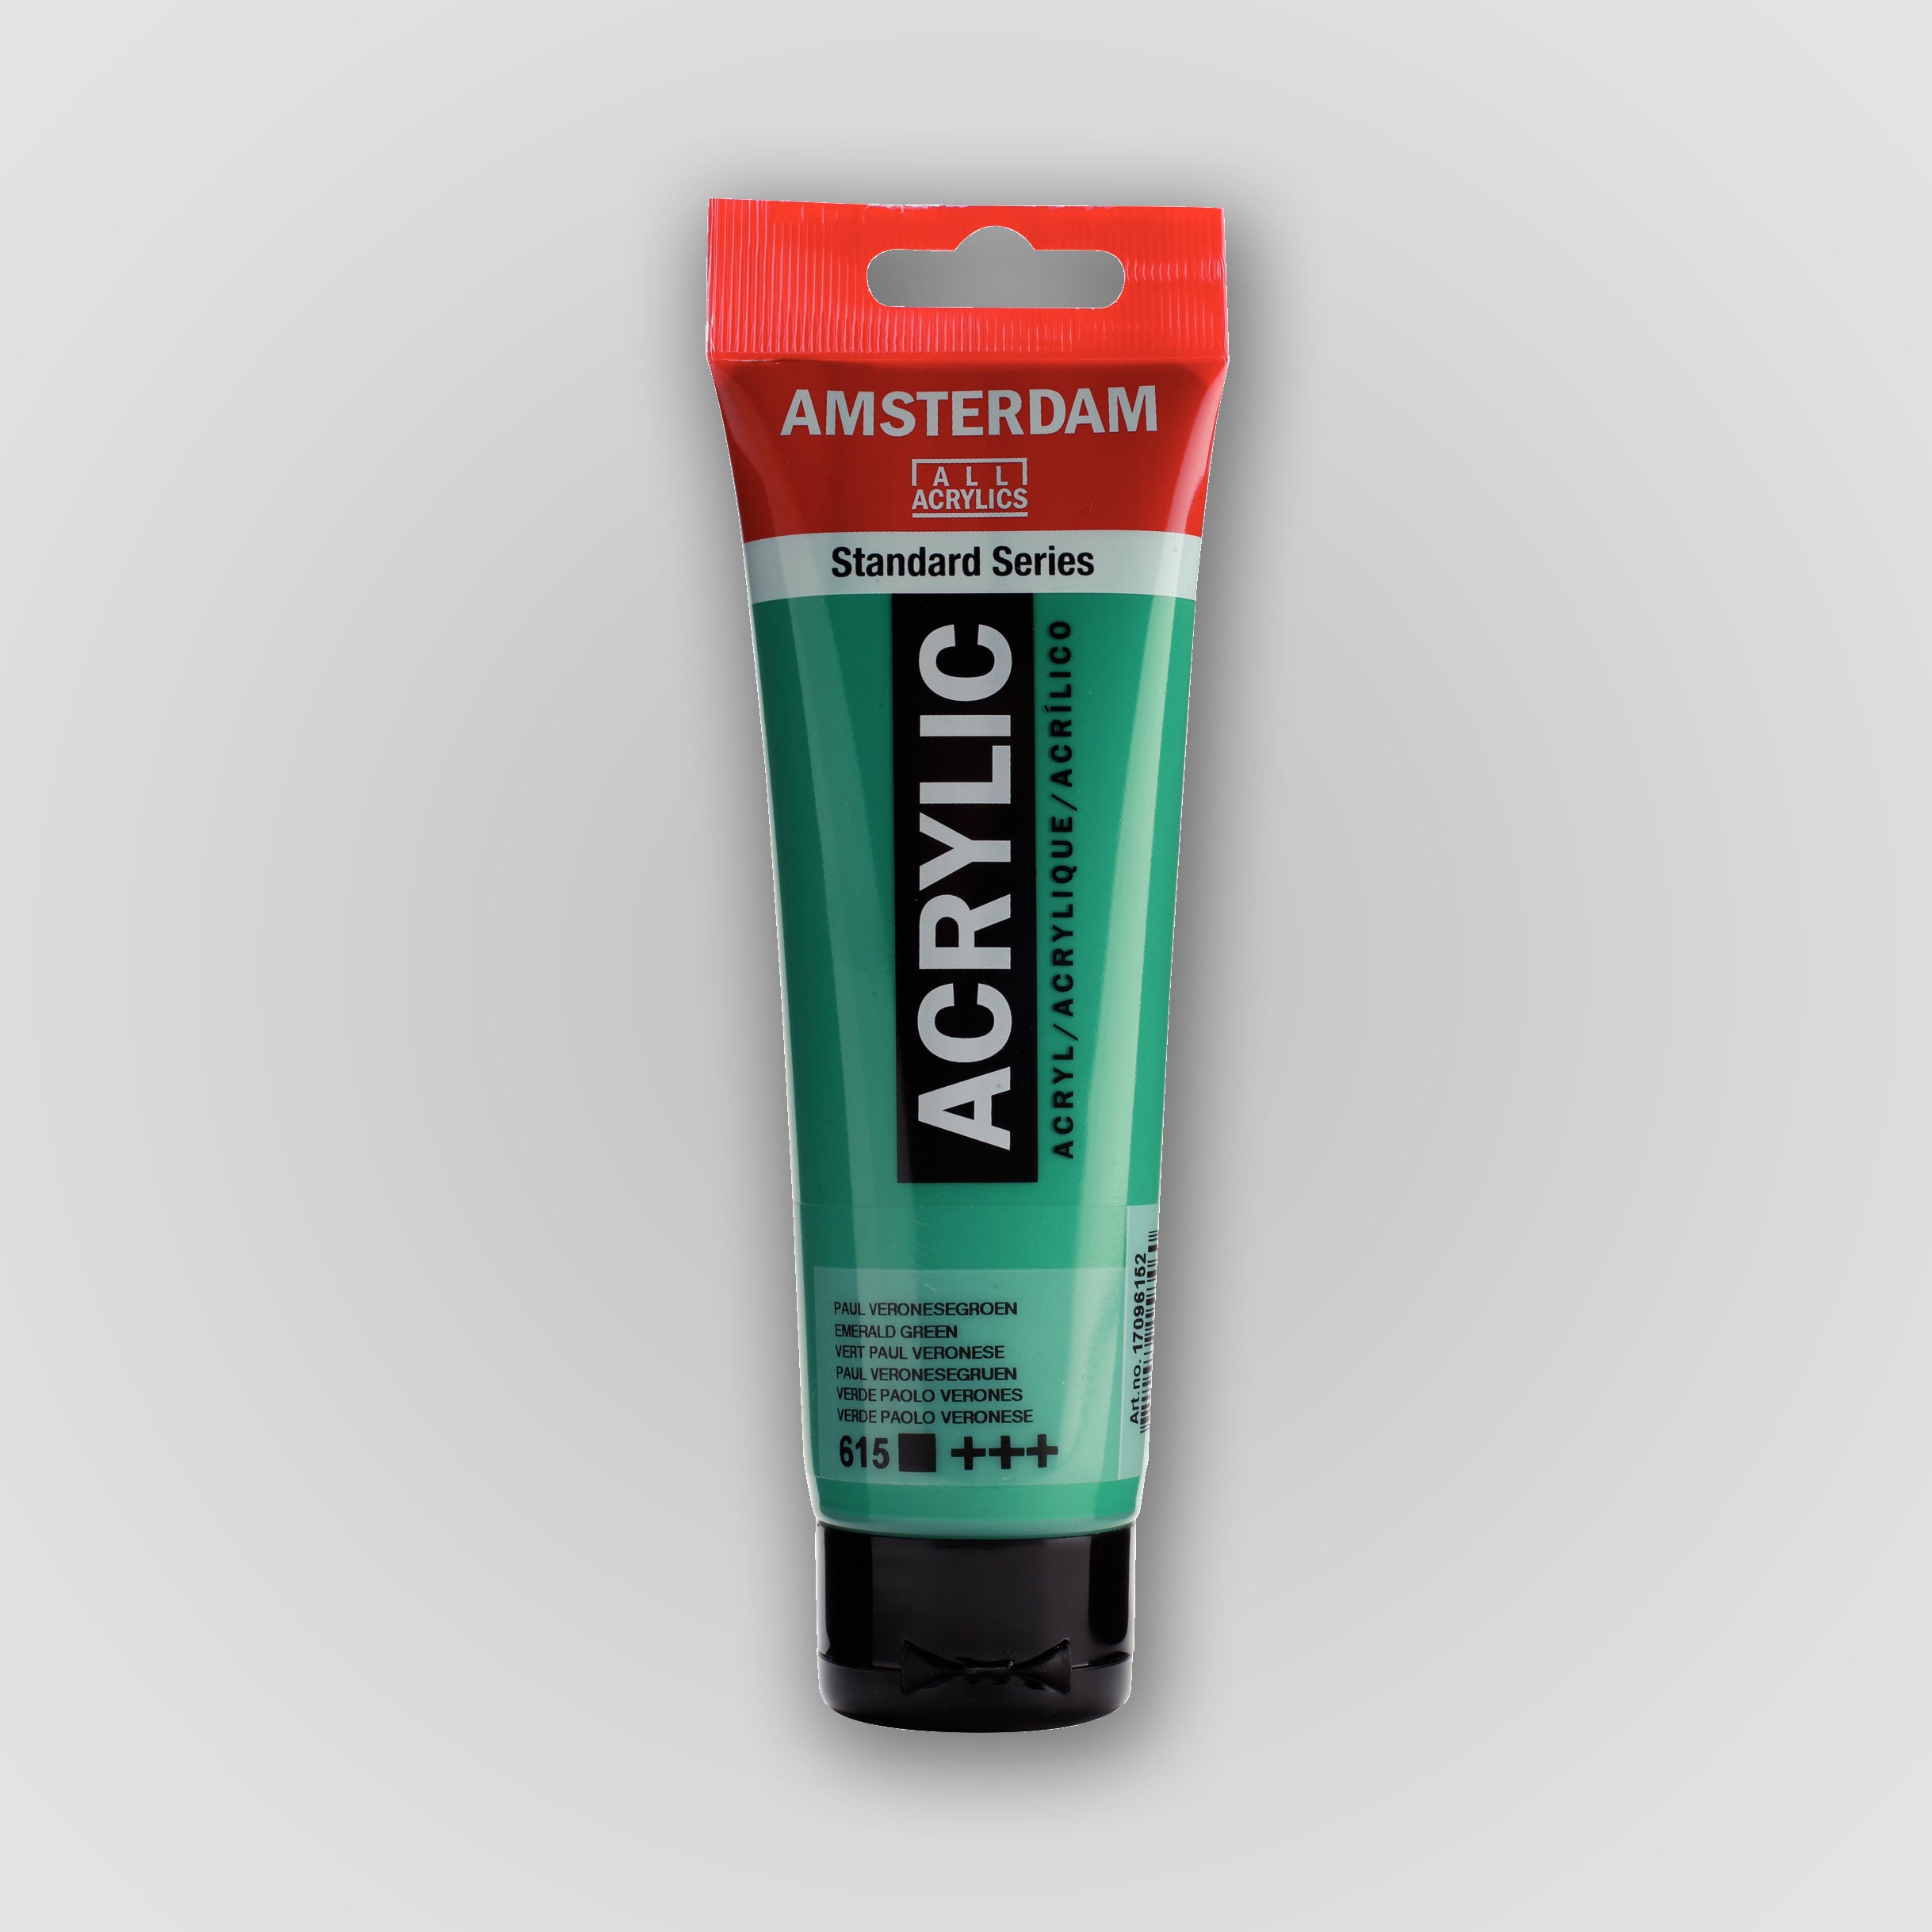 Amsterdam Standard Acrylic - Emerald Green, 120ml